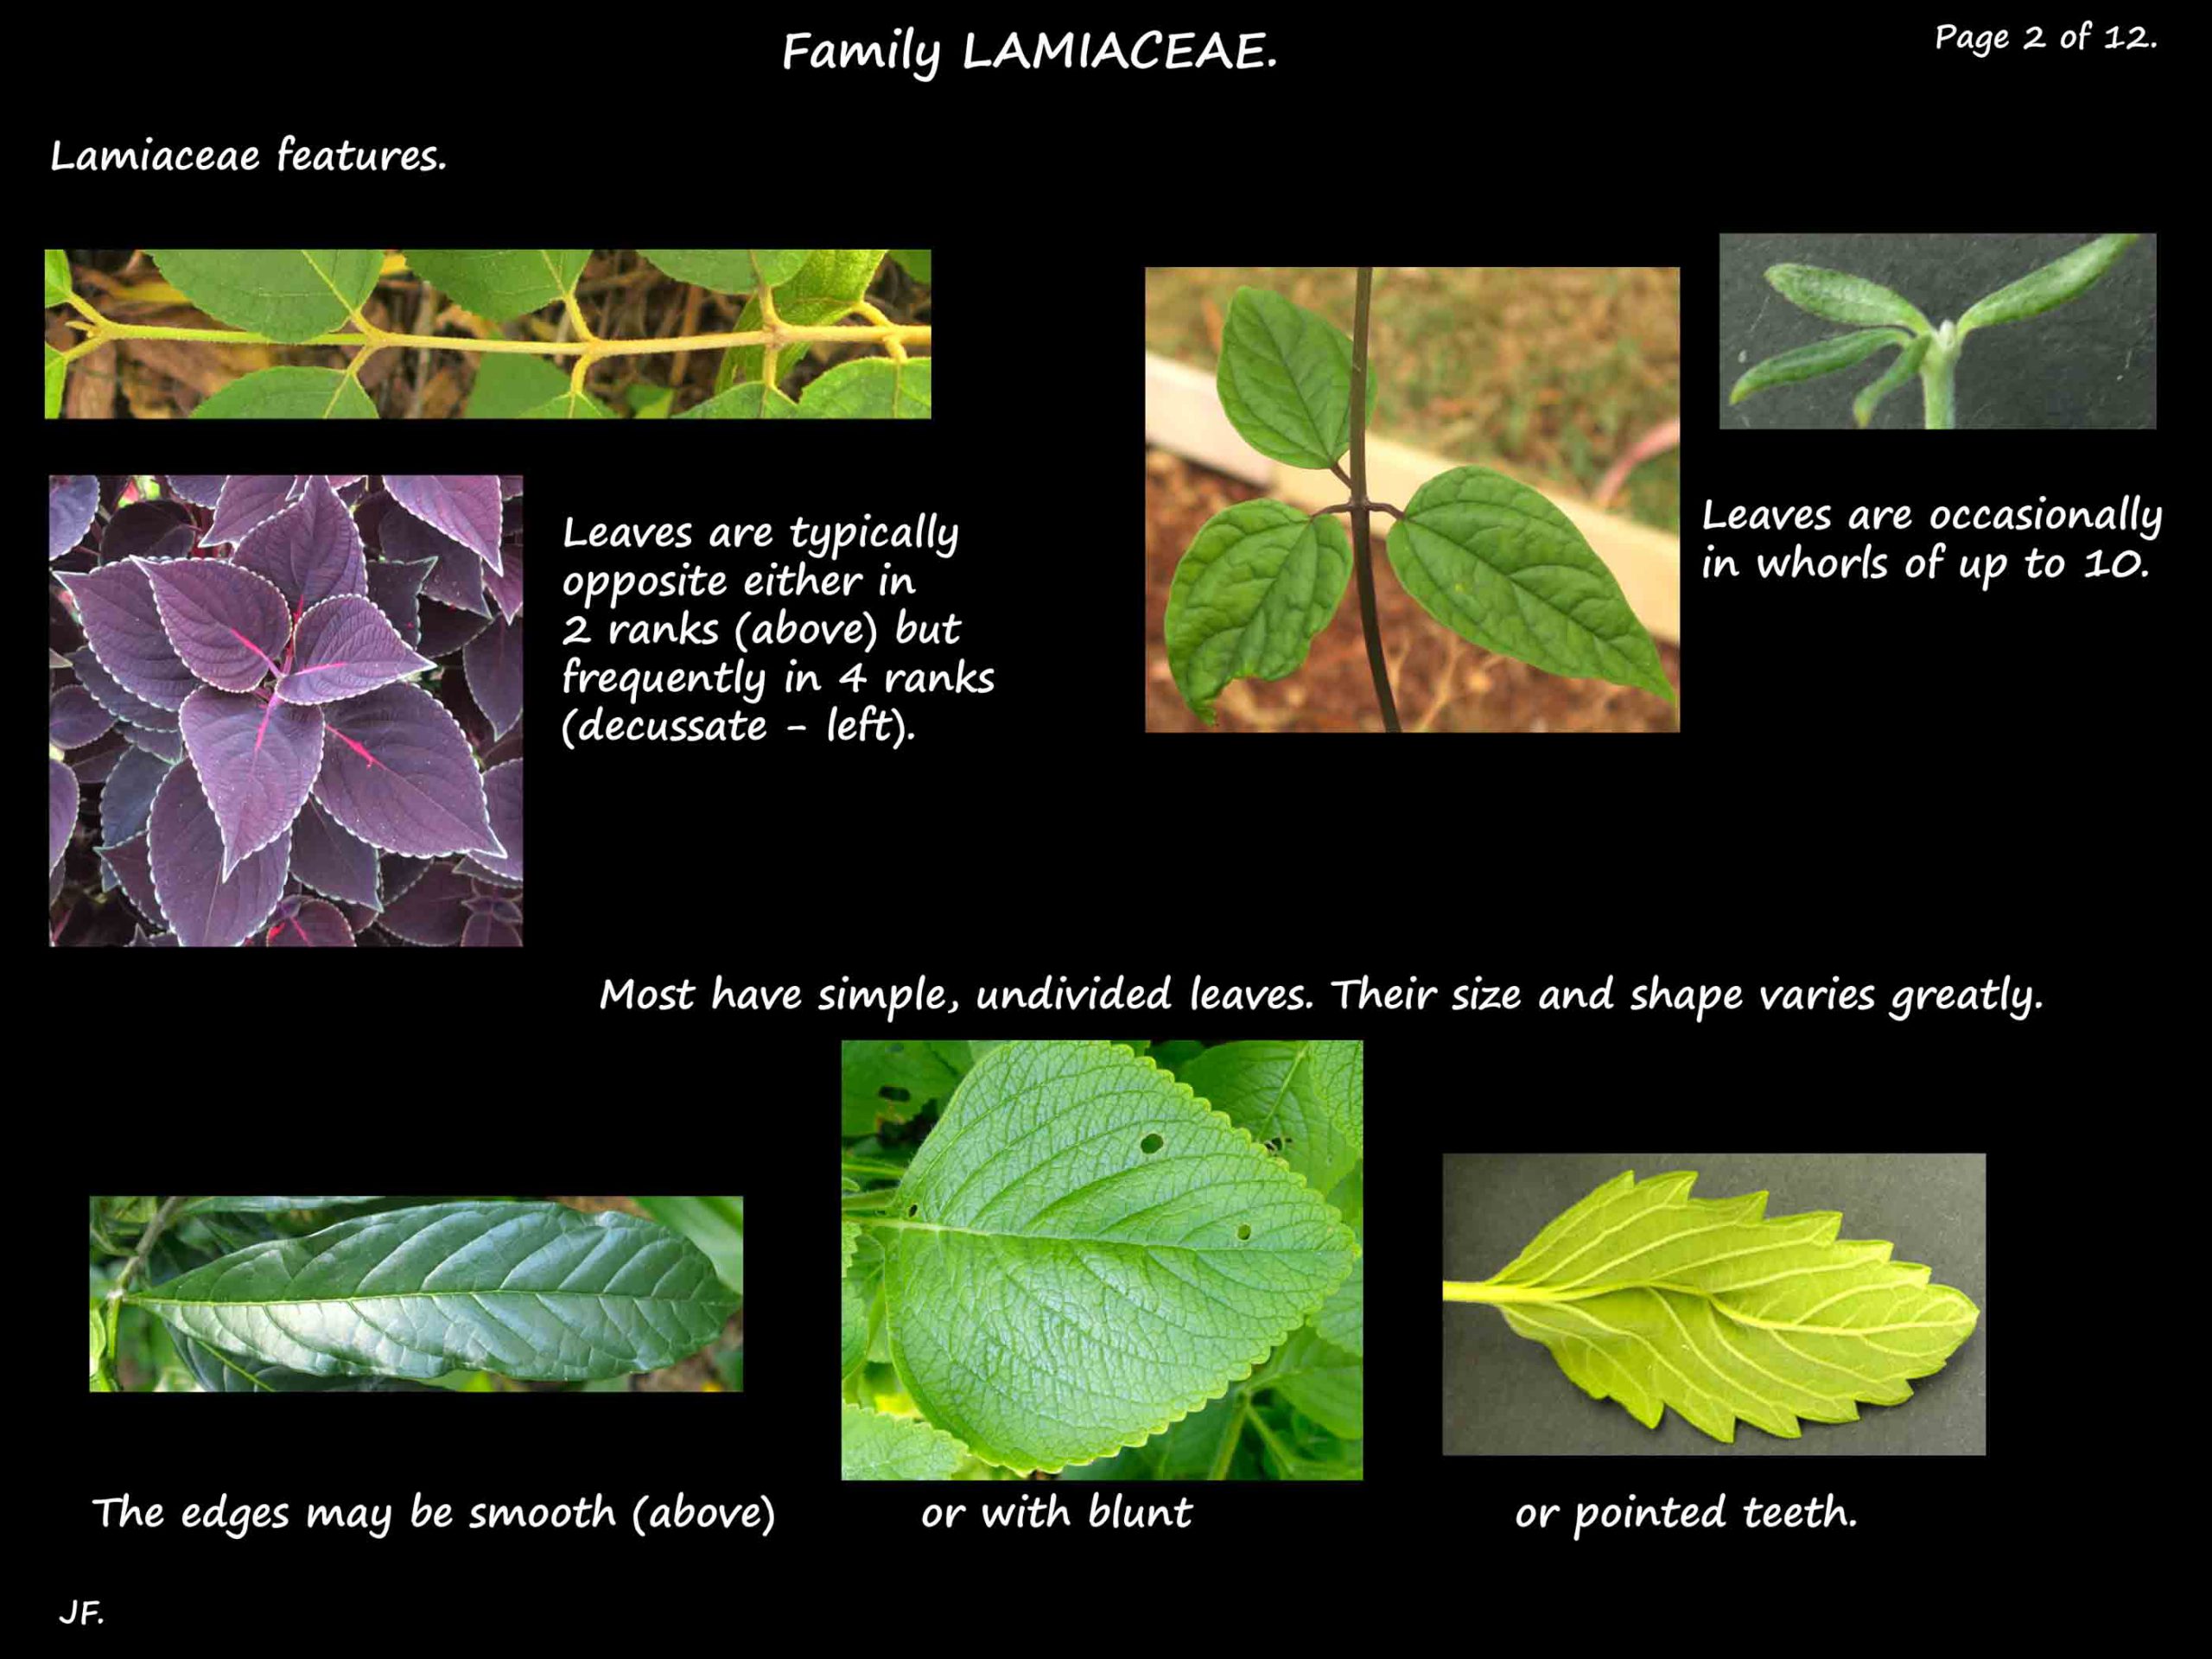 2 Lamiaceae leaves